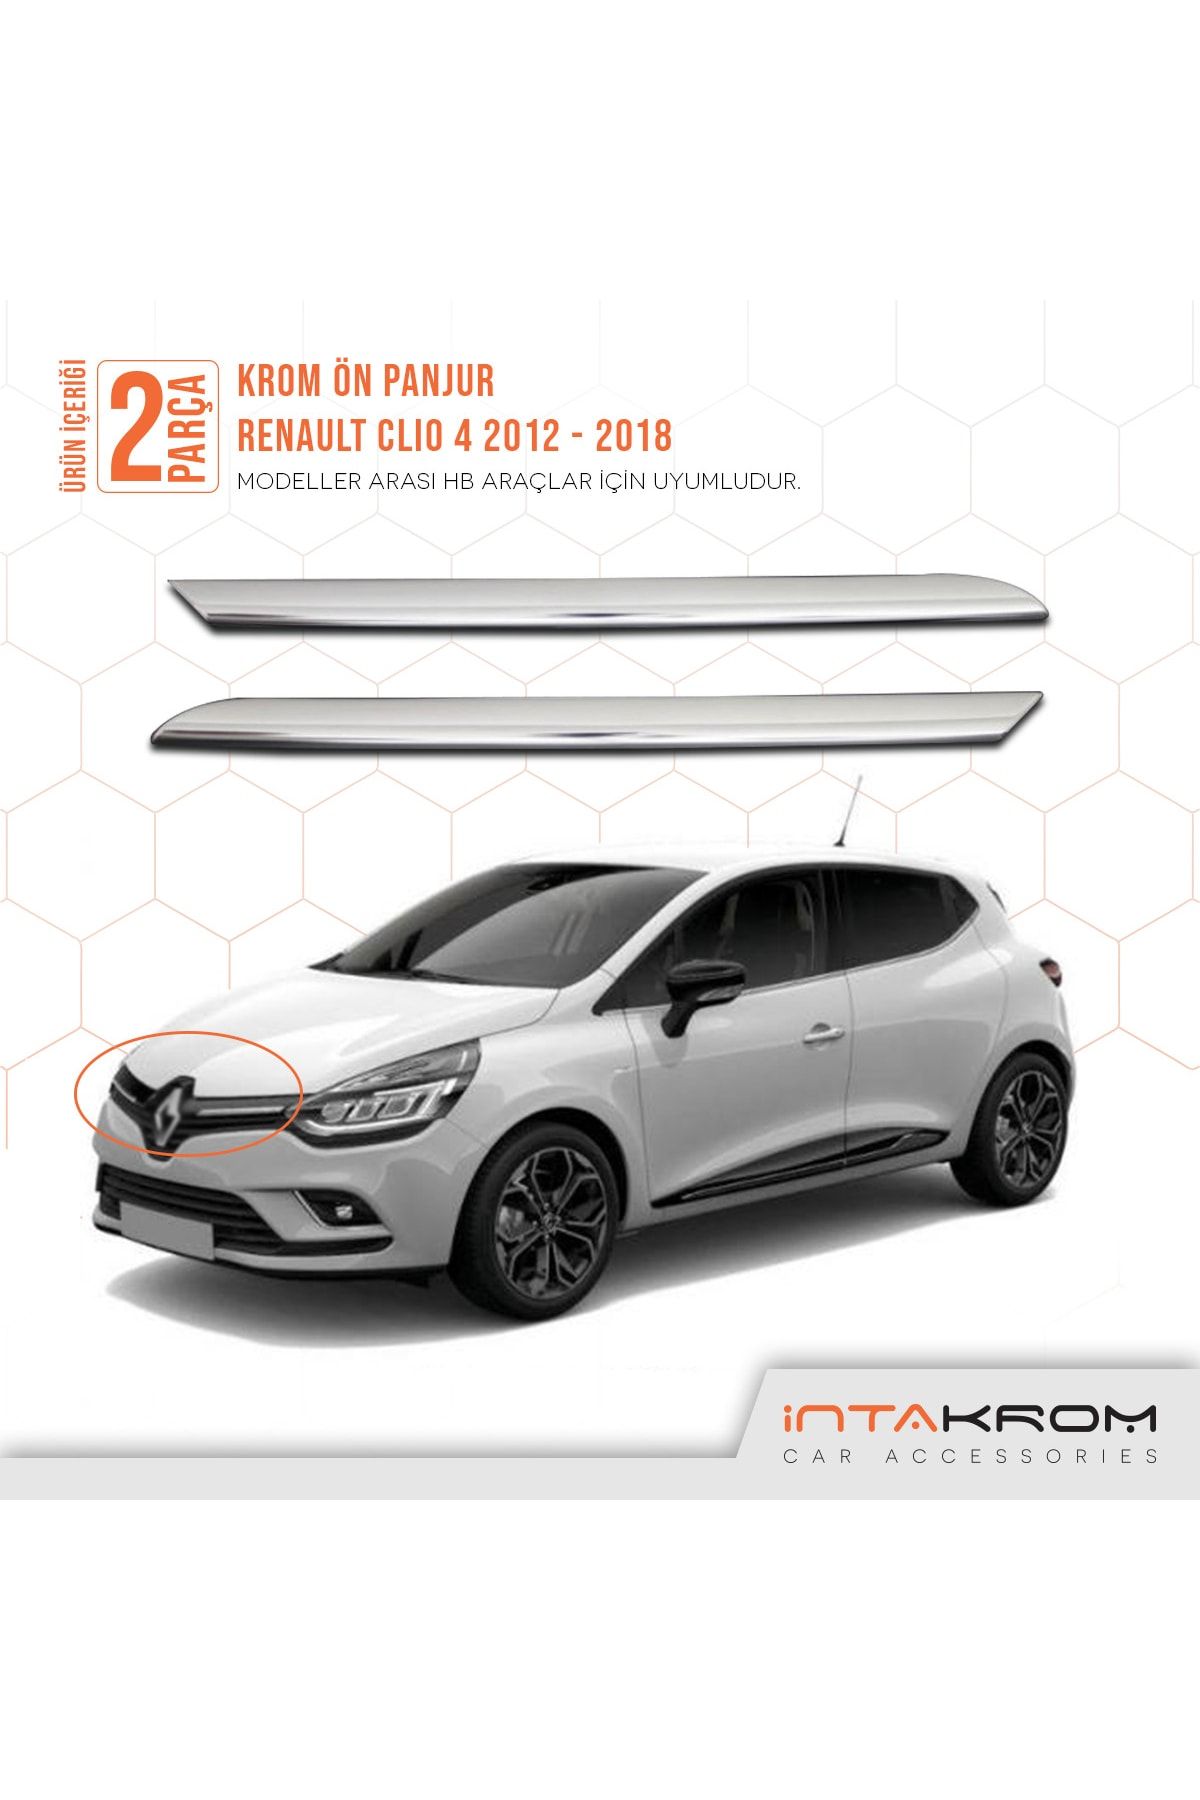 İntachrom Renault Clio 4 Krom Ön Panjur 2 Parça - 2012-2018